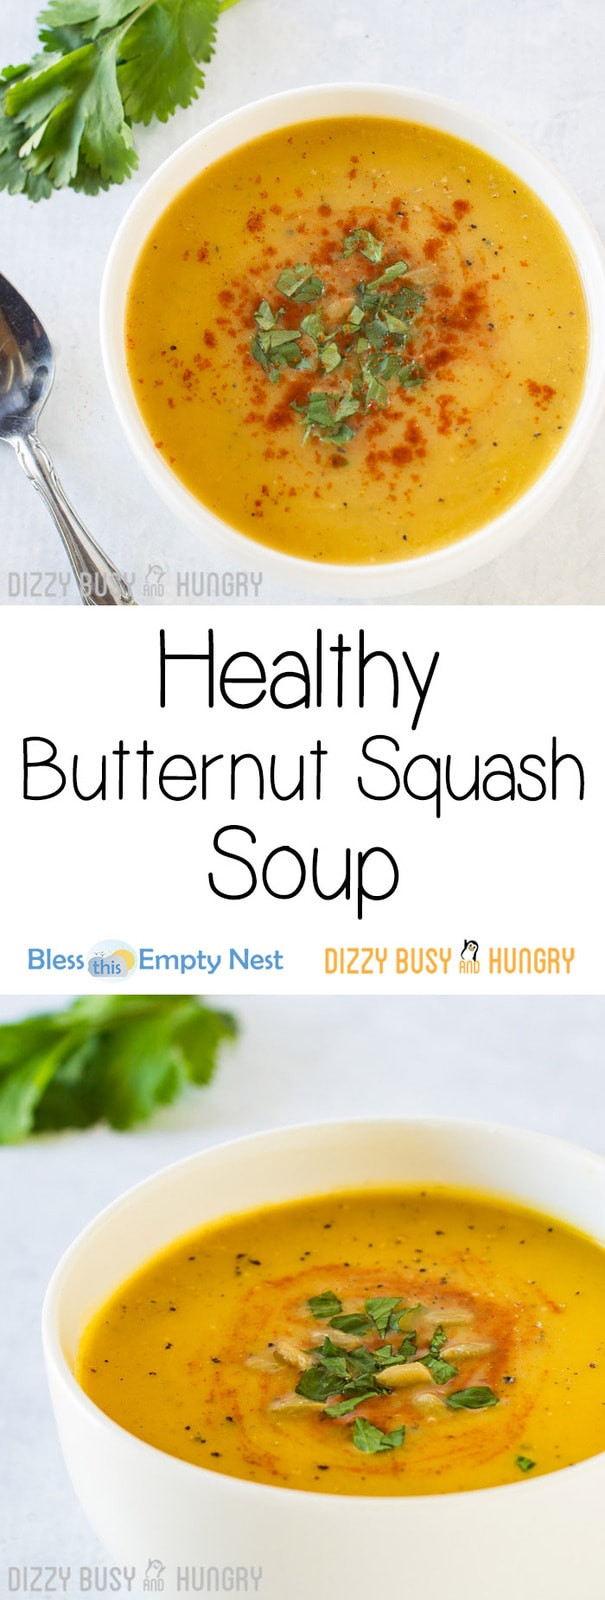 Healthy Butternut Squash Soup
 Healthy Butternut Squash Soup